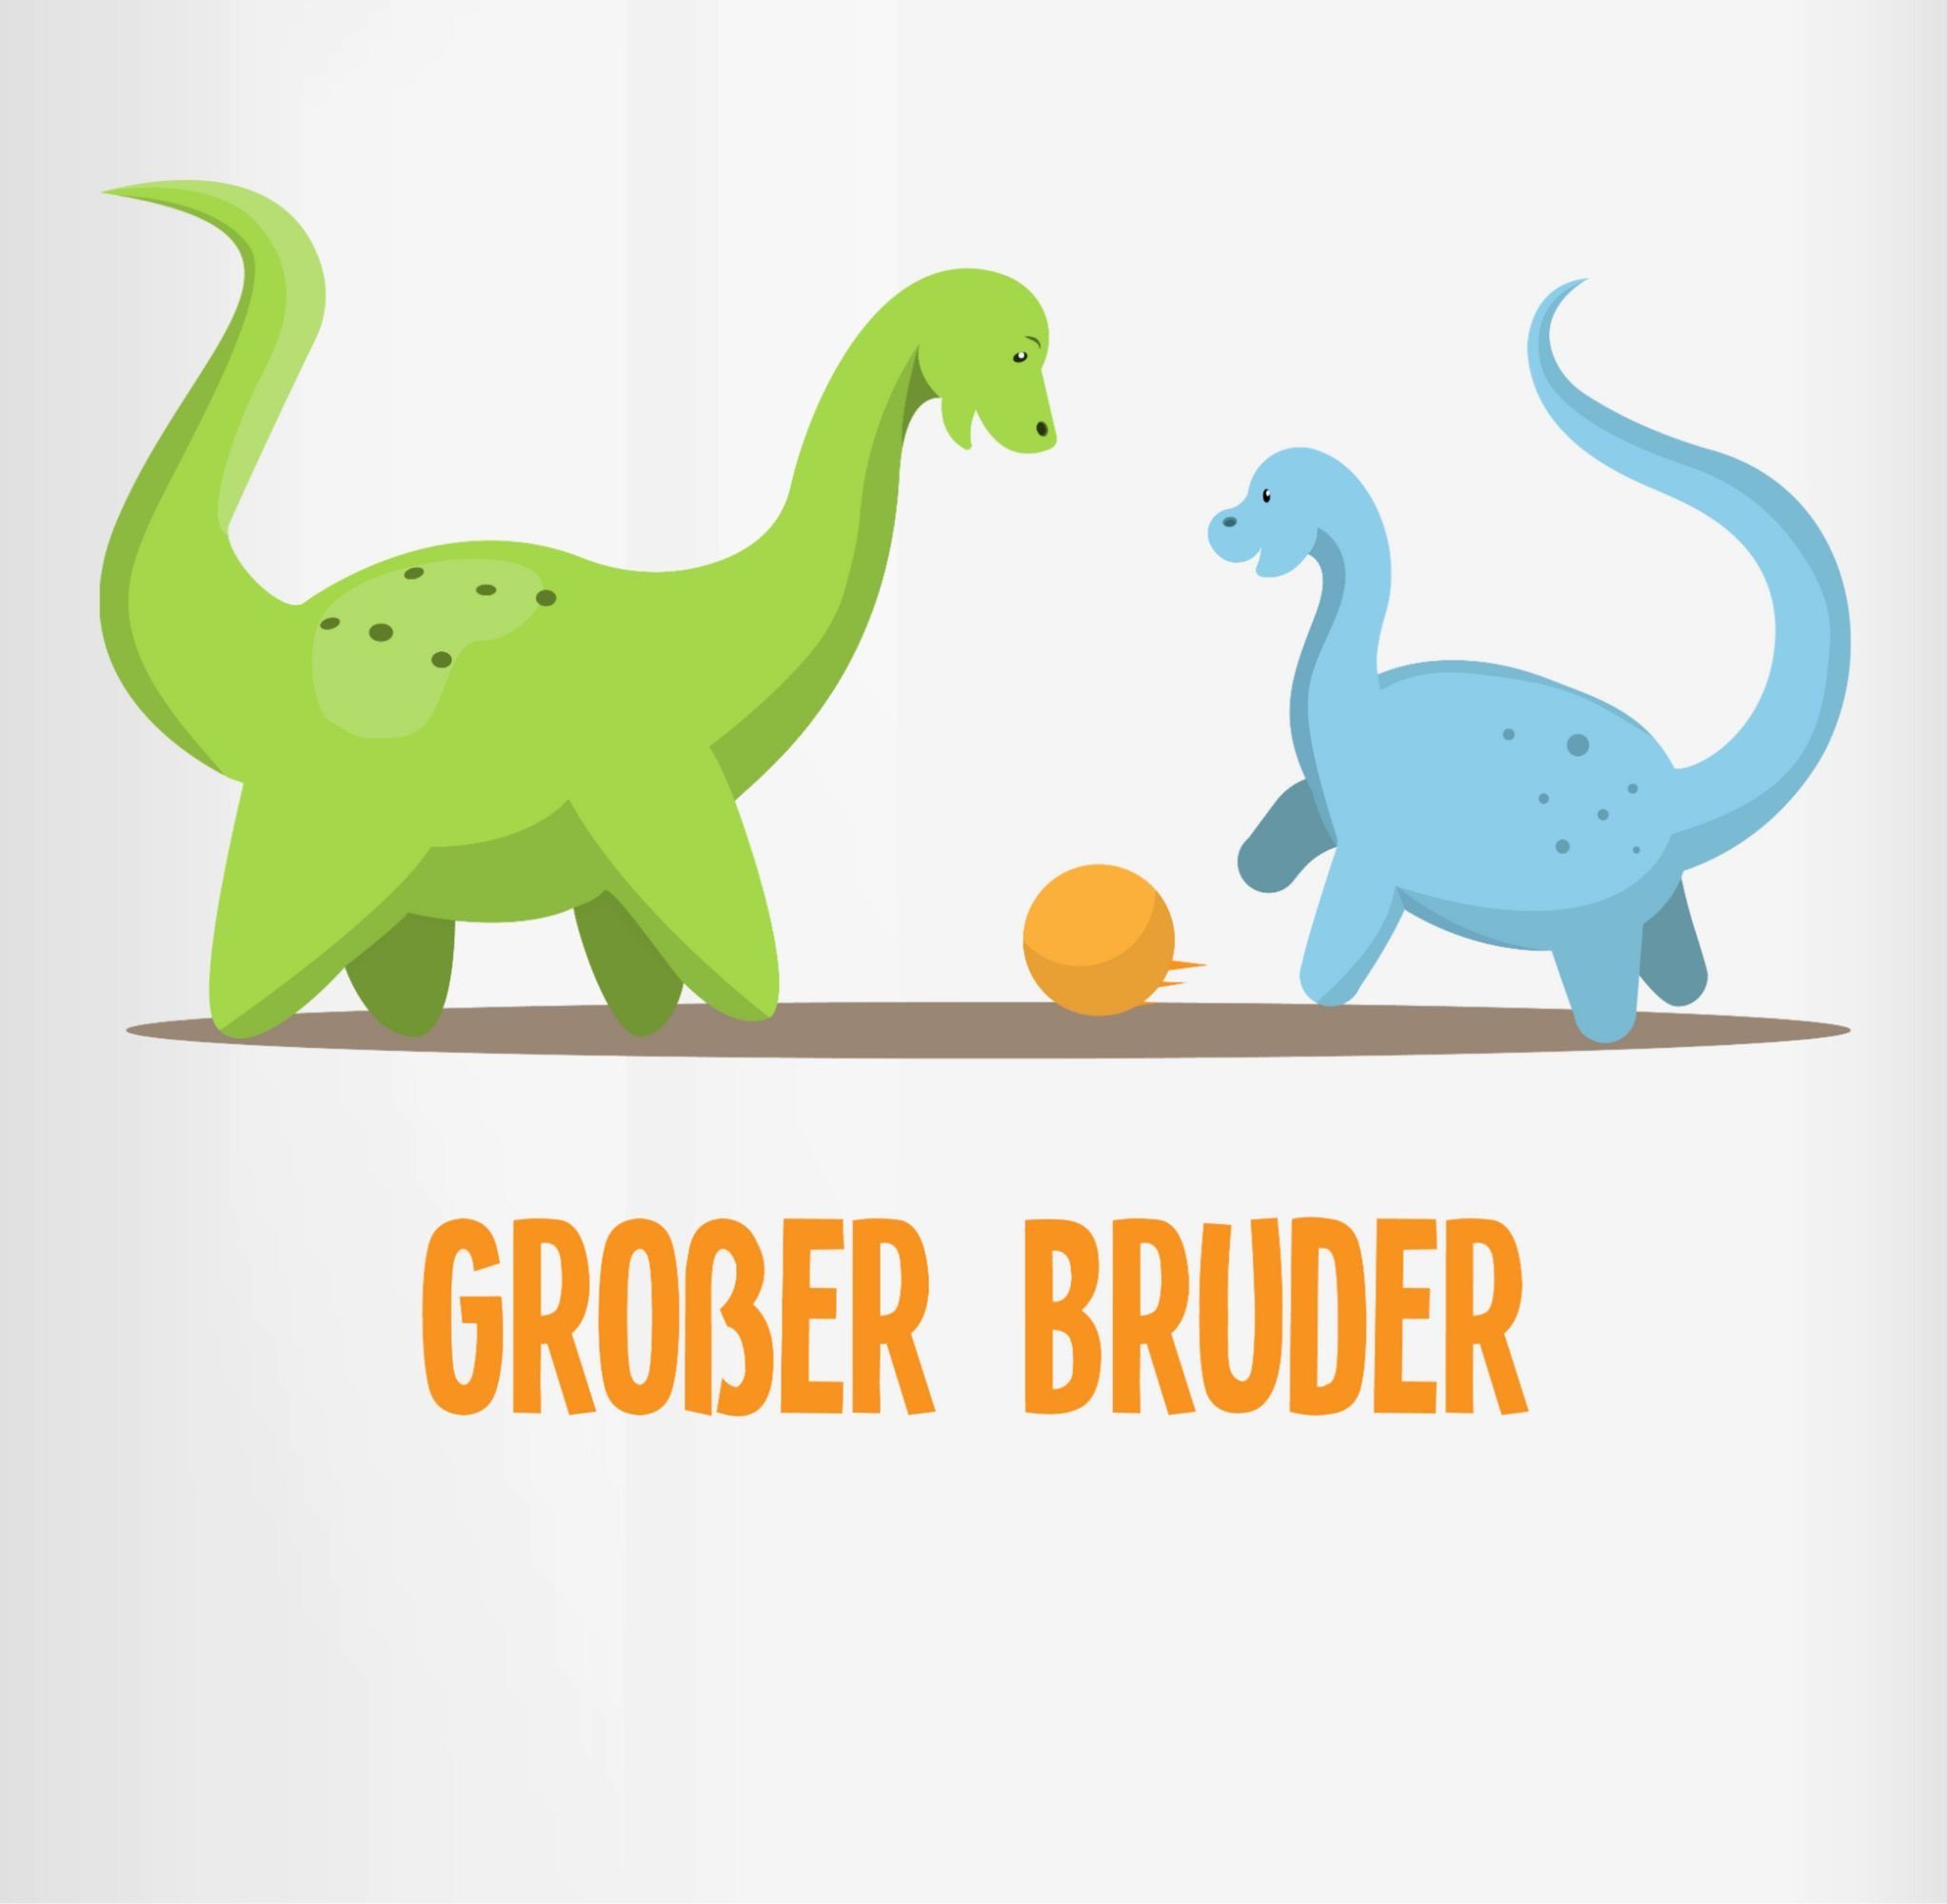 3 Bruder Shirtracer Großer Keramik, Hellblau Dinosaurier, Großer Bruder Tasse